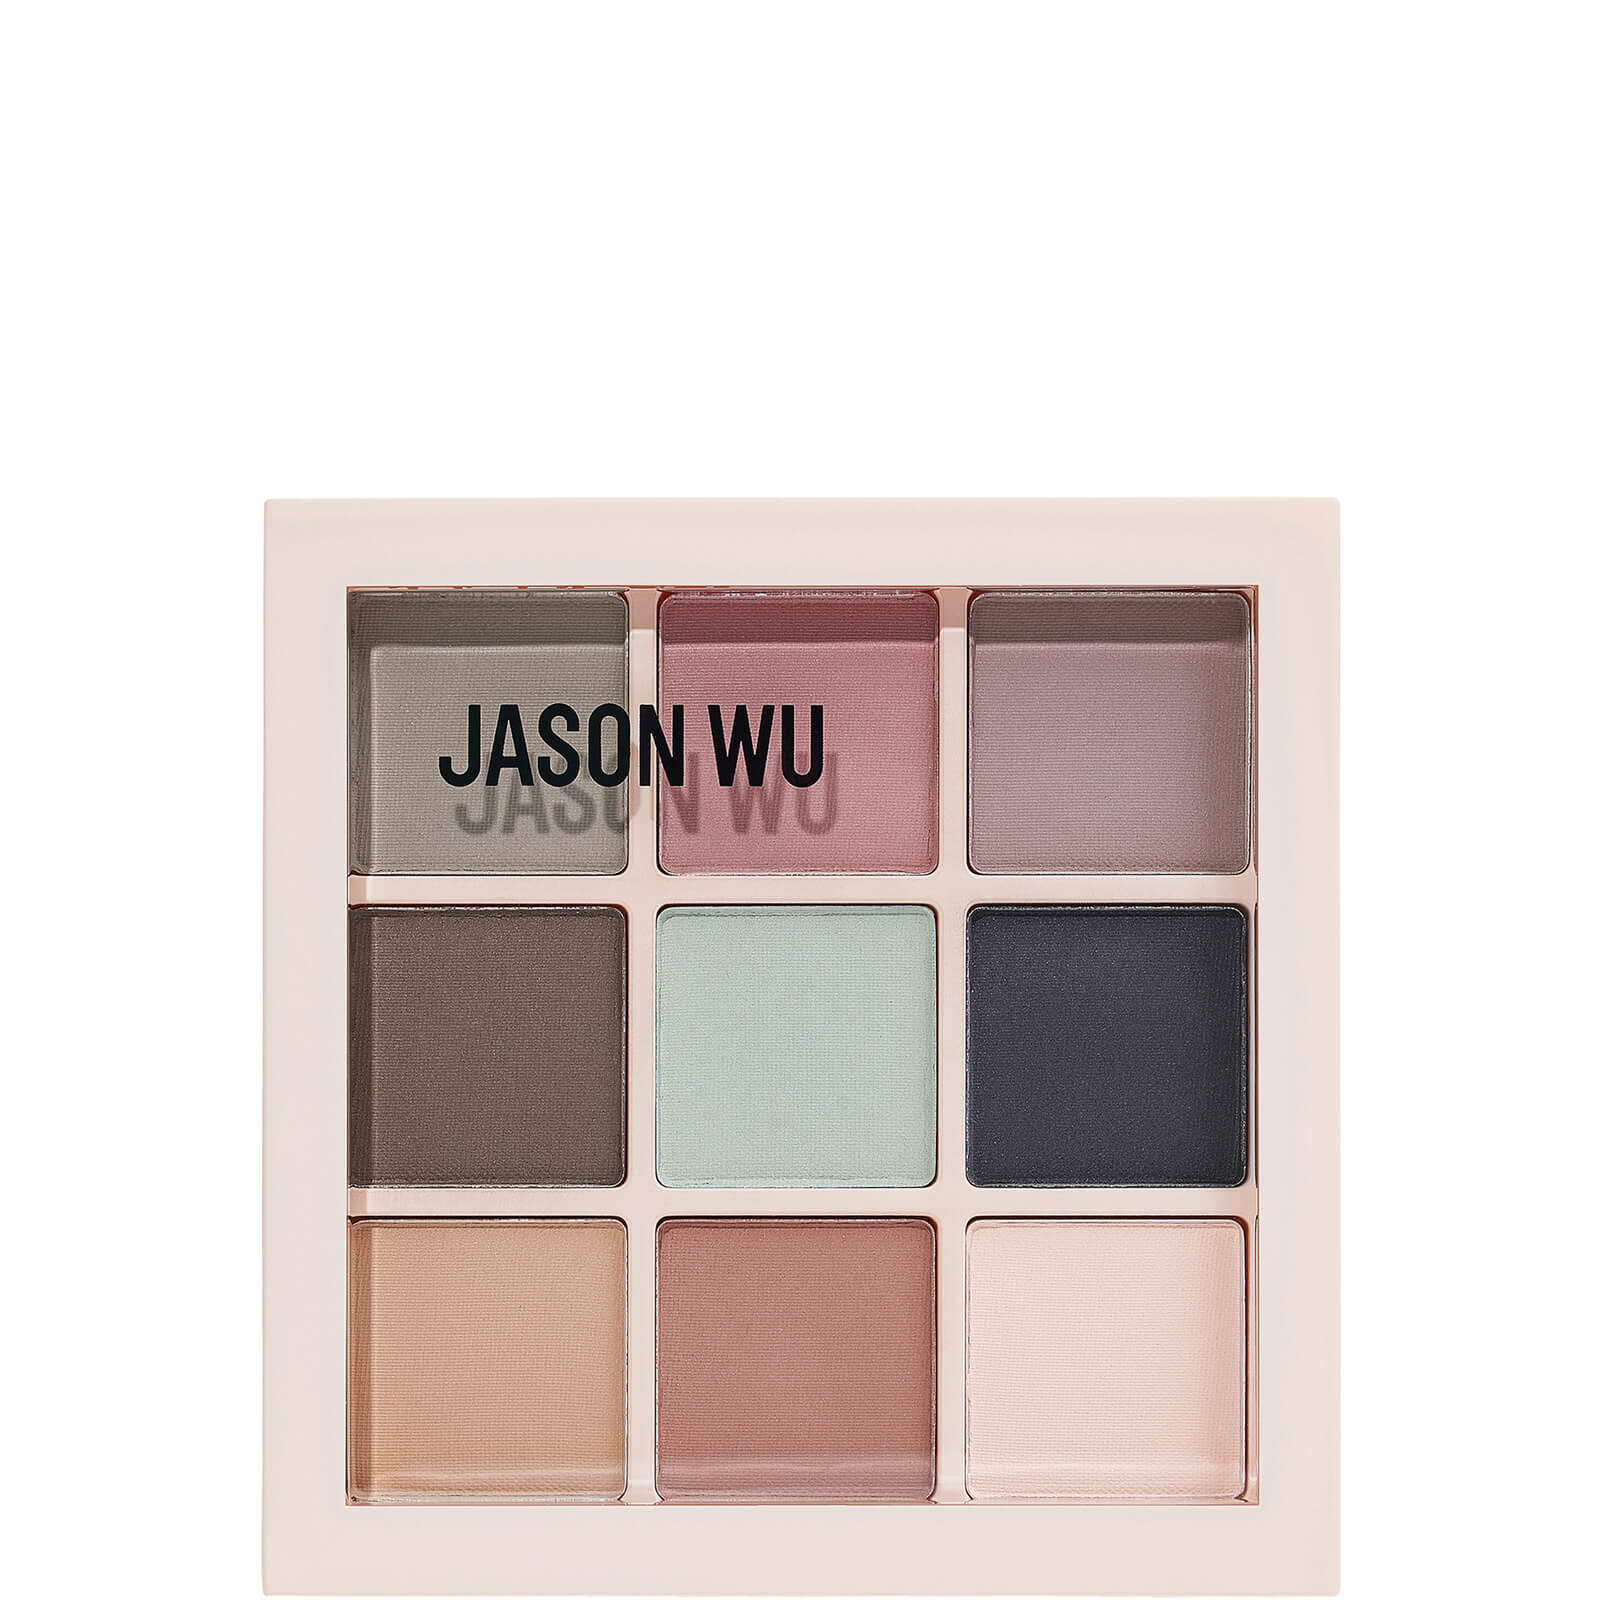 Jason Wu Beauty Flora 9 Palette 5.85g (various Shades) - Matte Suede